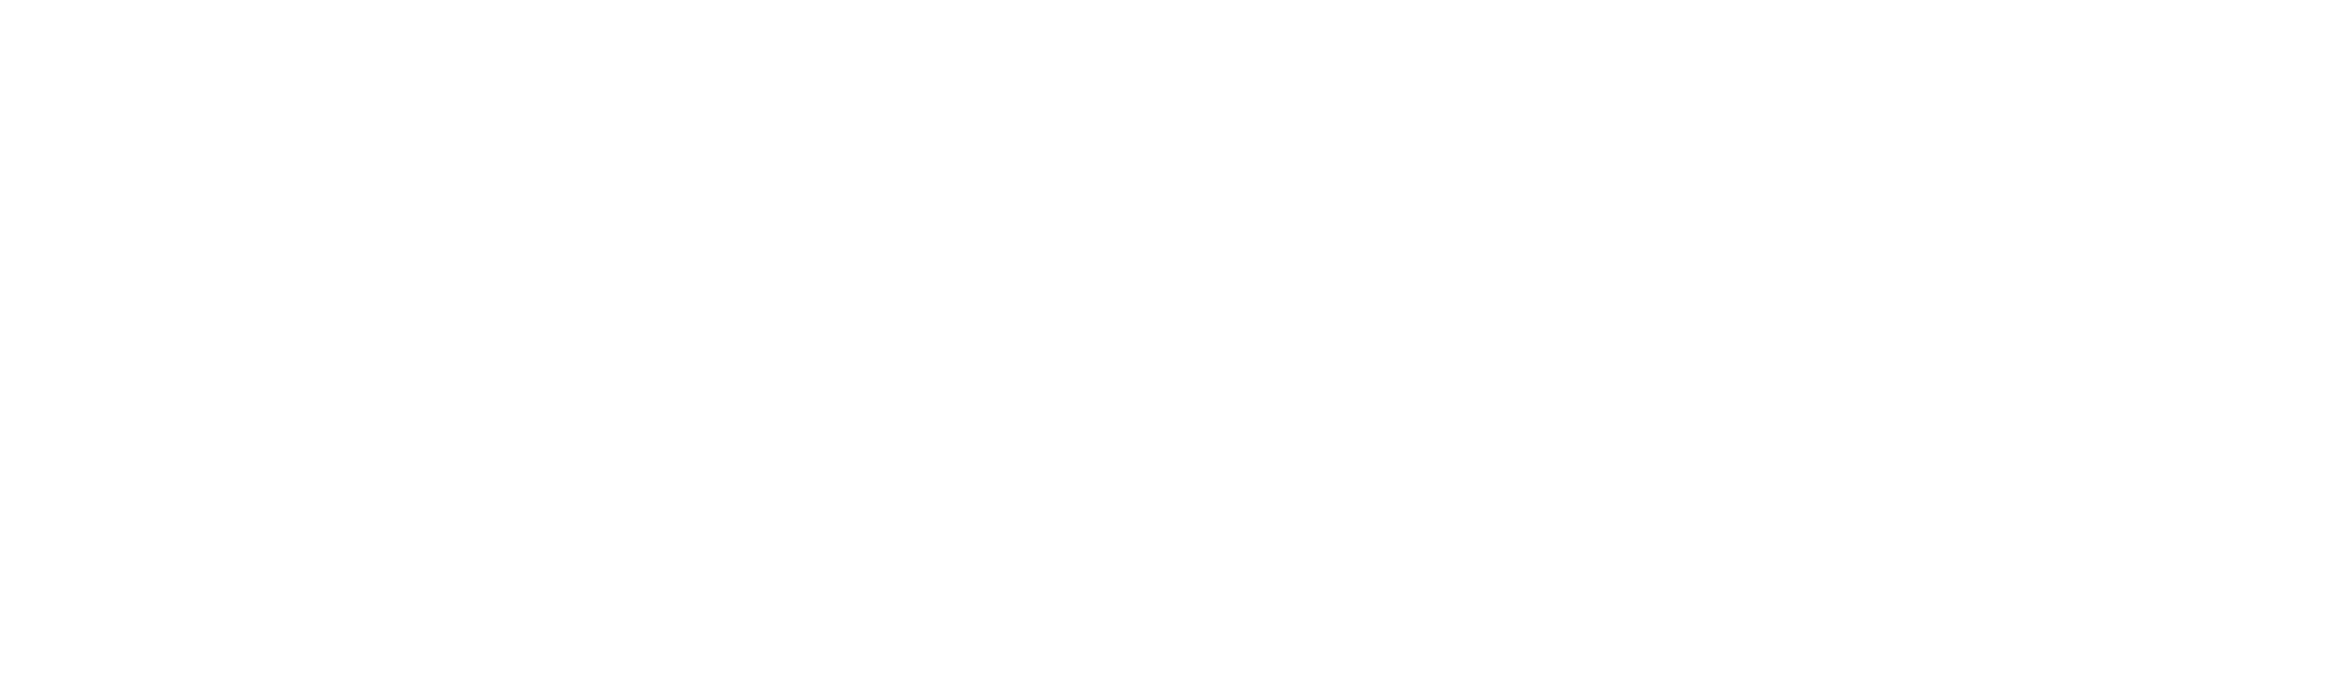 pop art portraits brand logo mobile